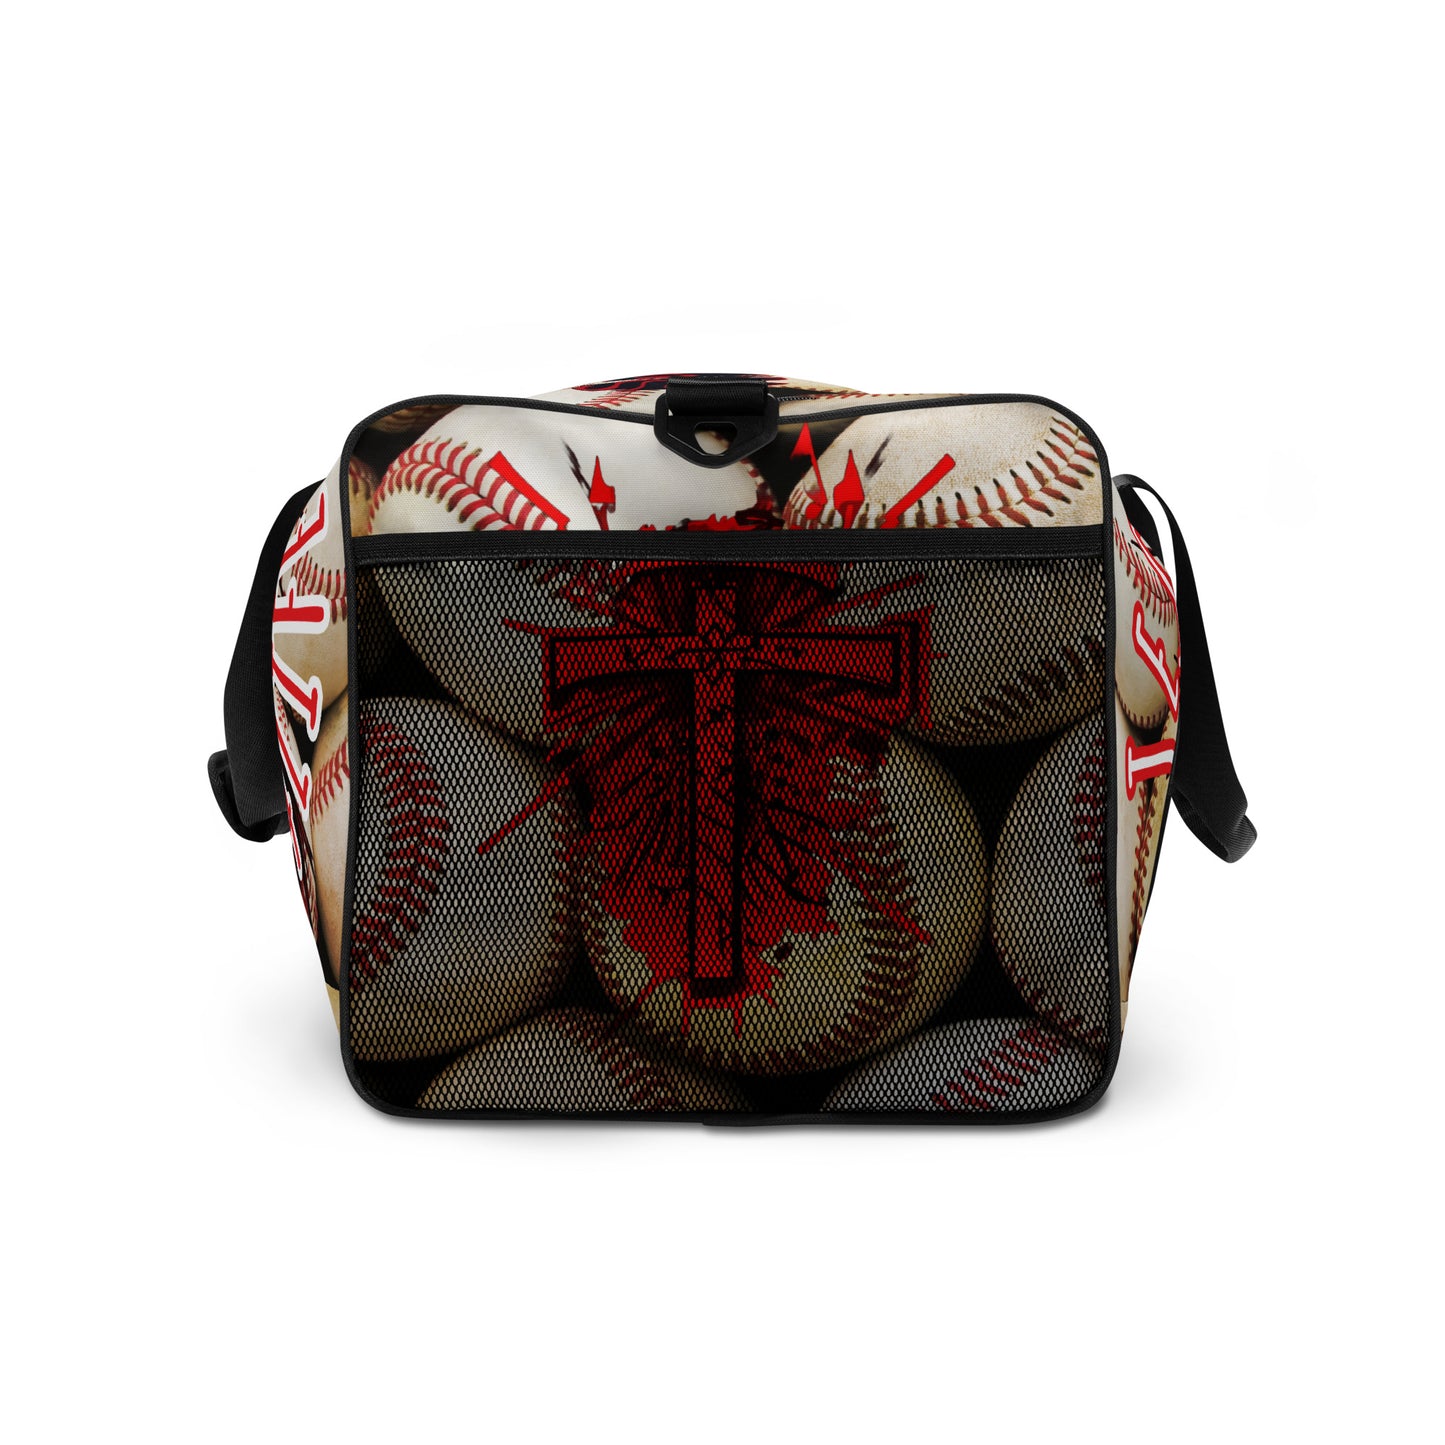 Jesus Fan 4Life- Baseball Duffle bag